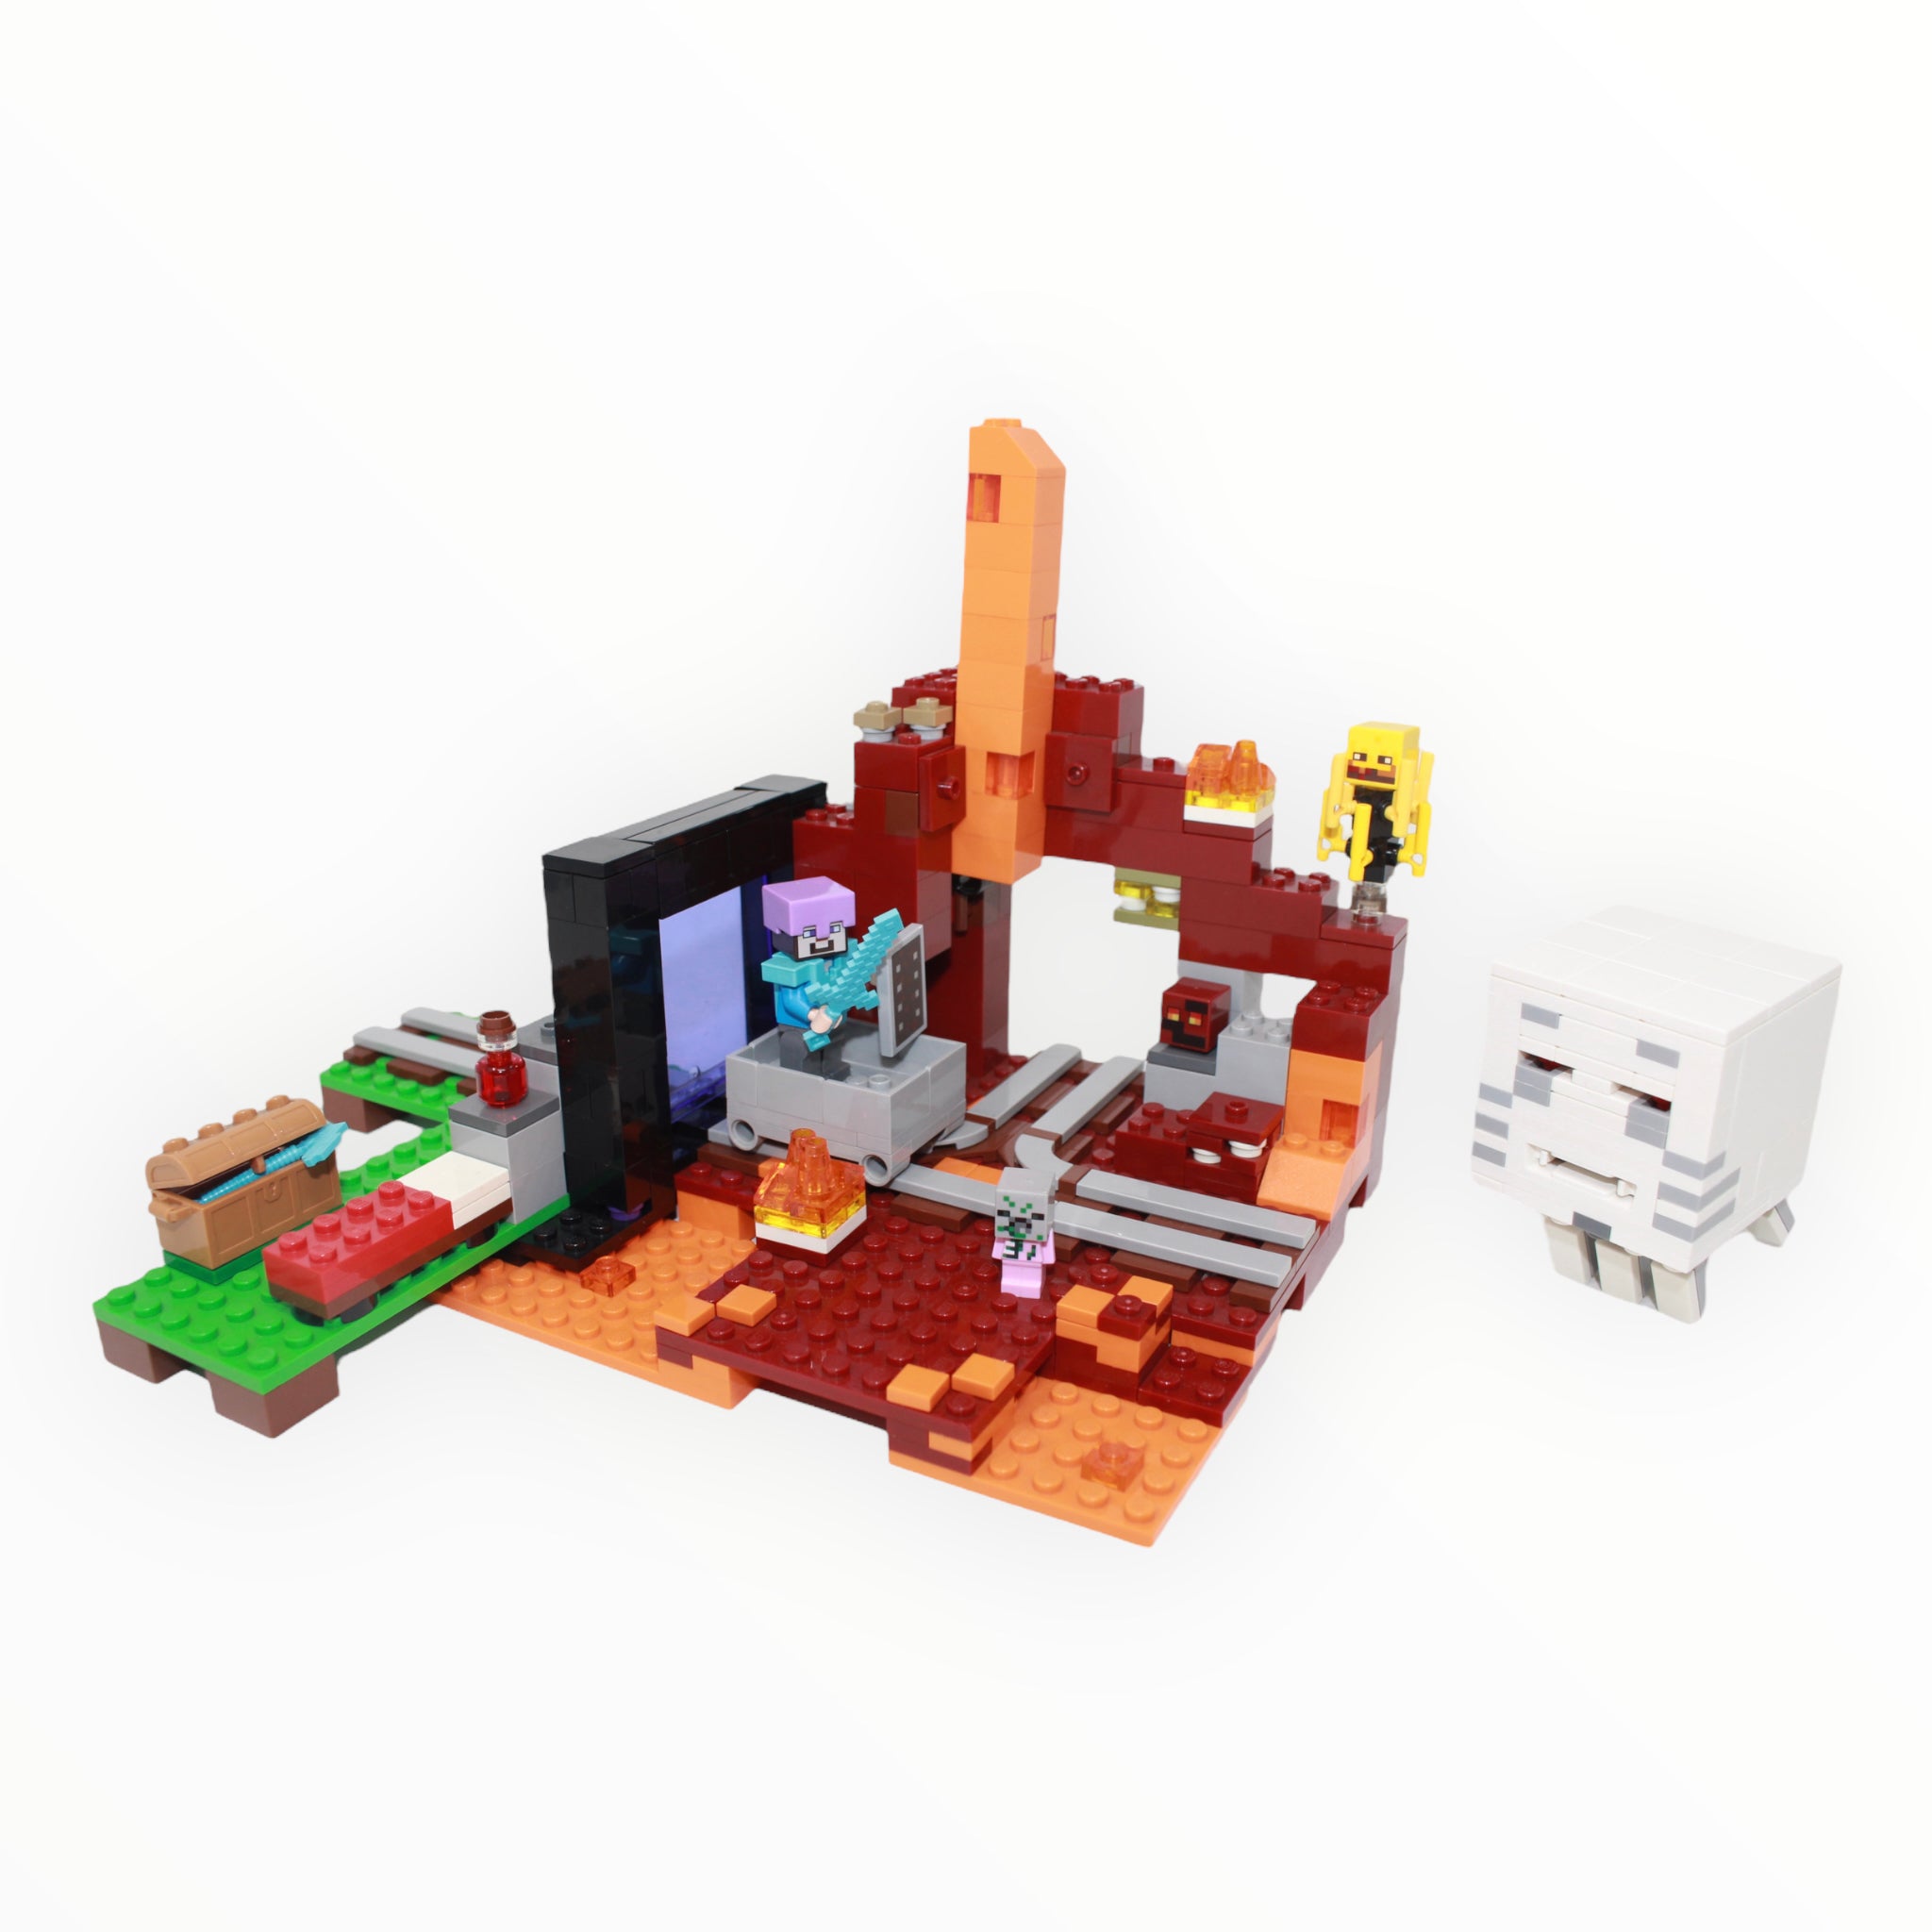 LEGO Minecraft The Nether Portal Set 21143 - US